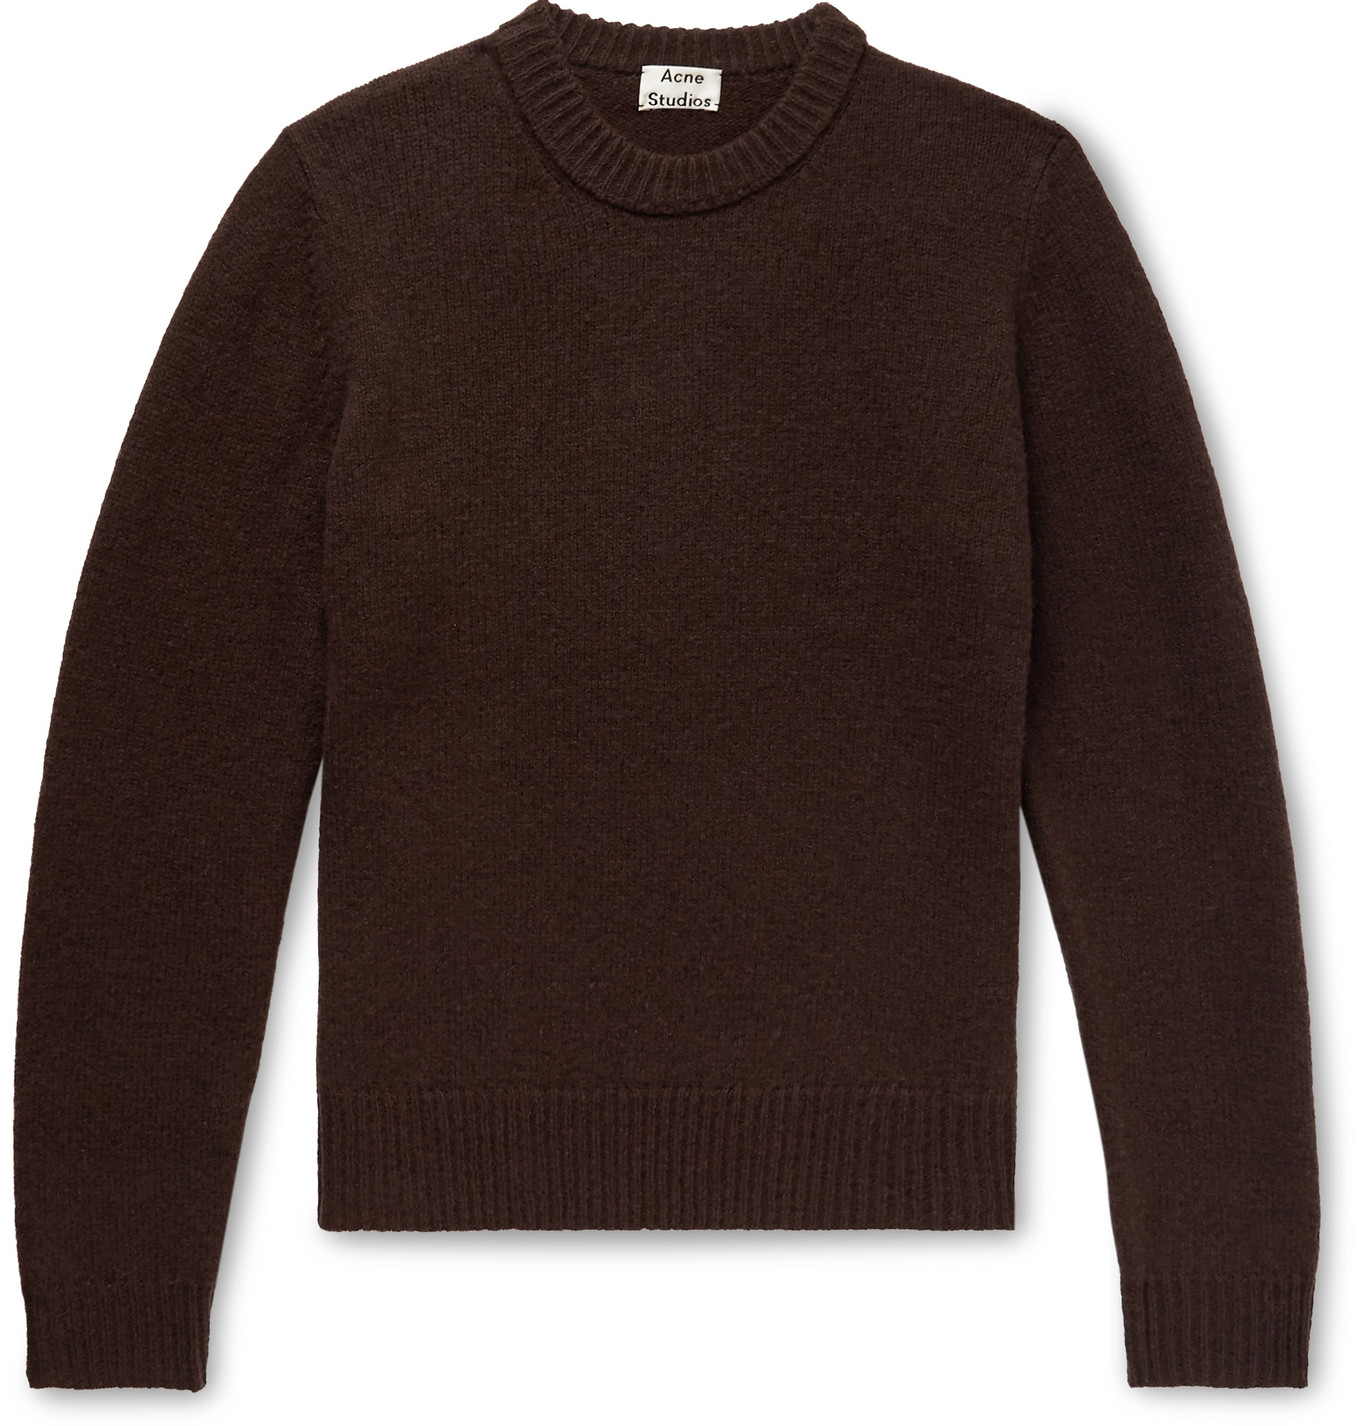 Acne Studios - Wool Sweater - Men - Brown | The Fashionisto